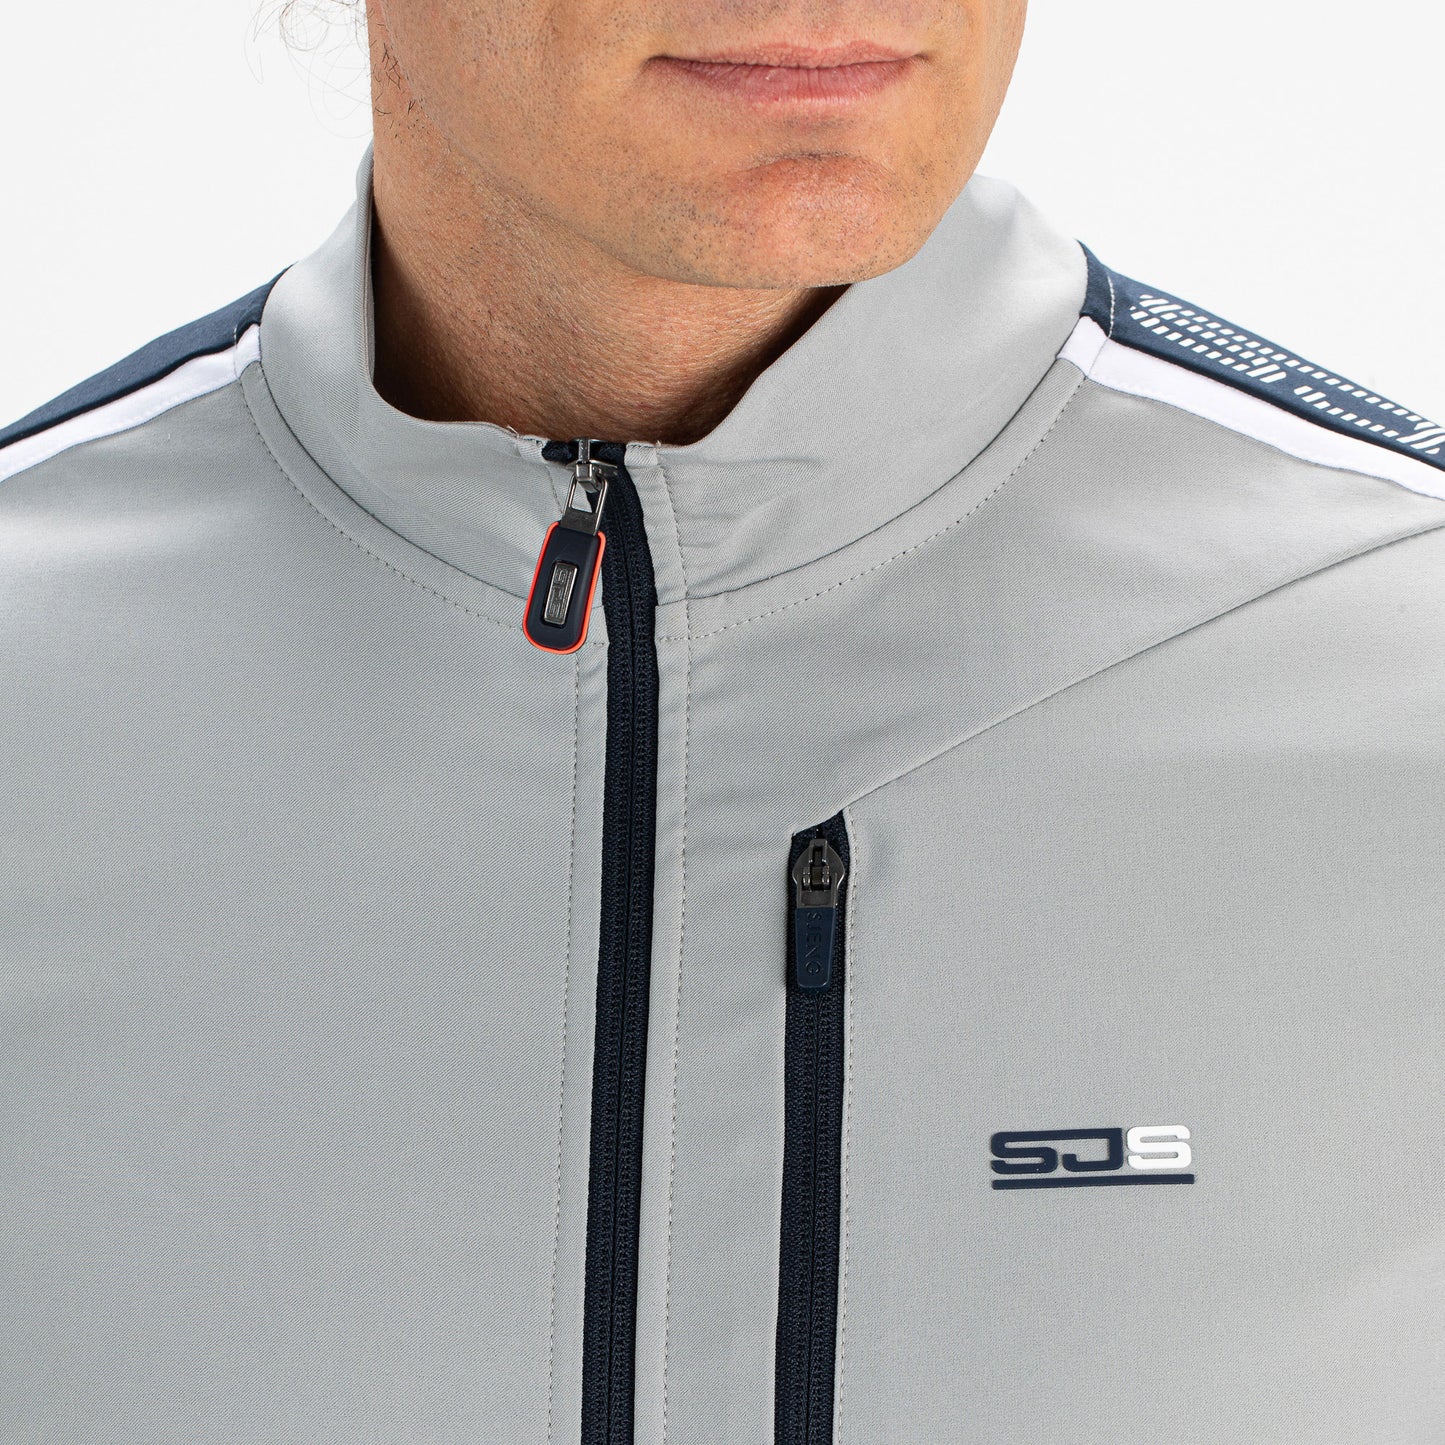 Sjeng Sports Adam Men's Tennis Jacket Grey (3)